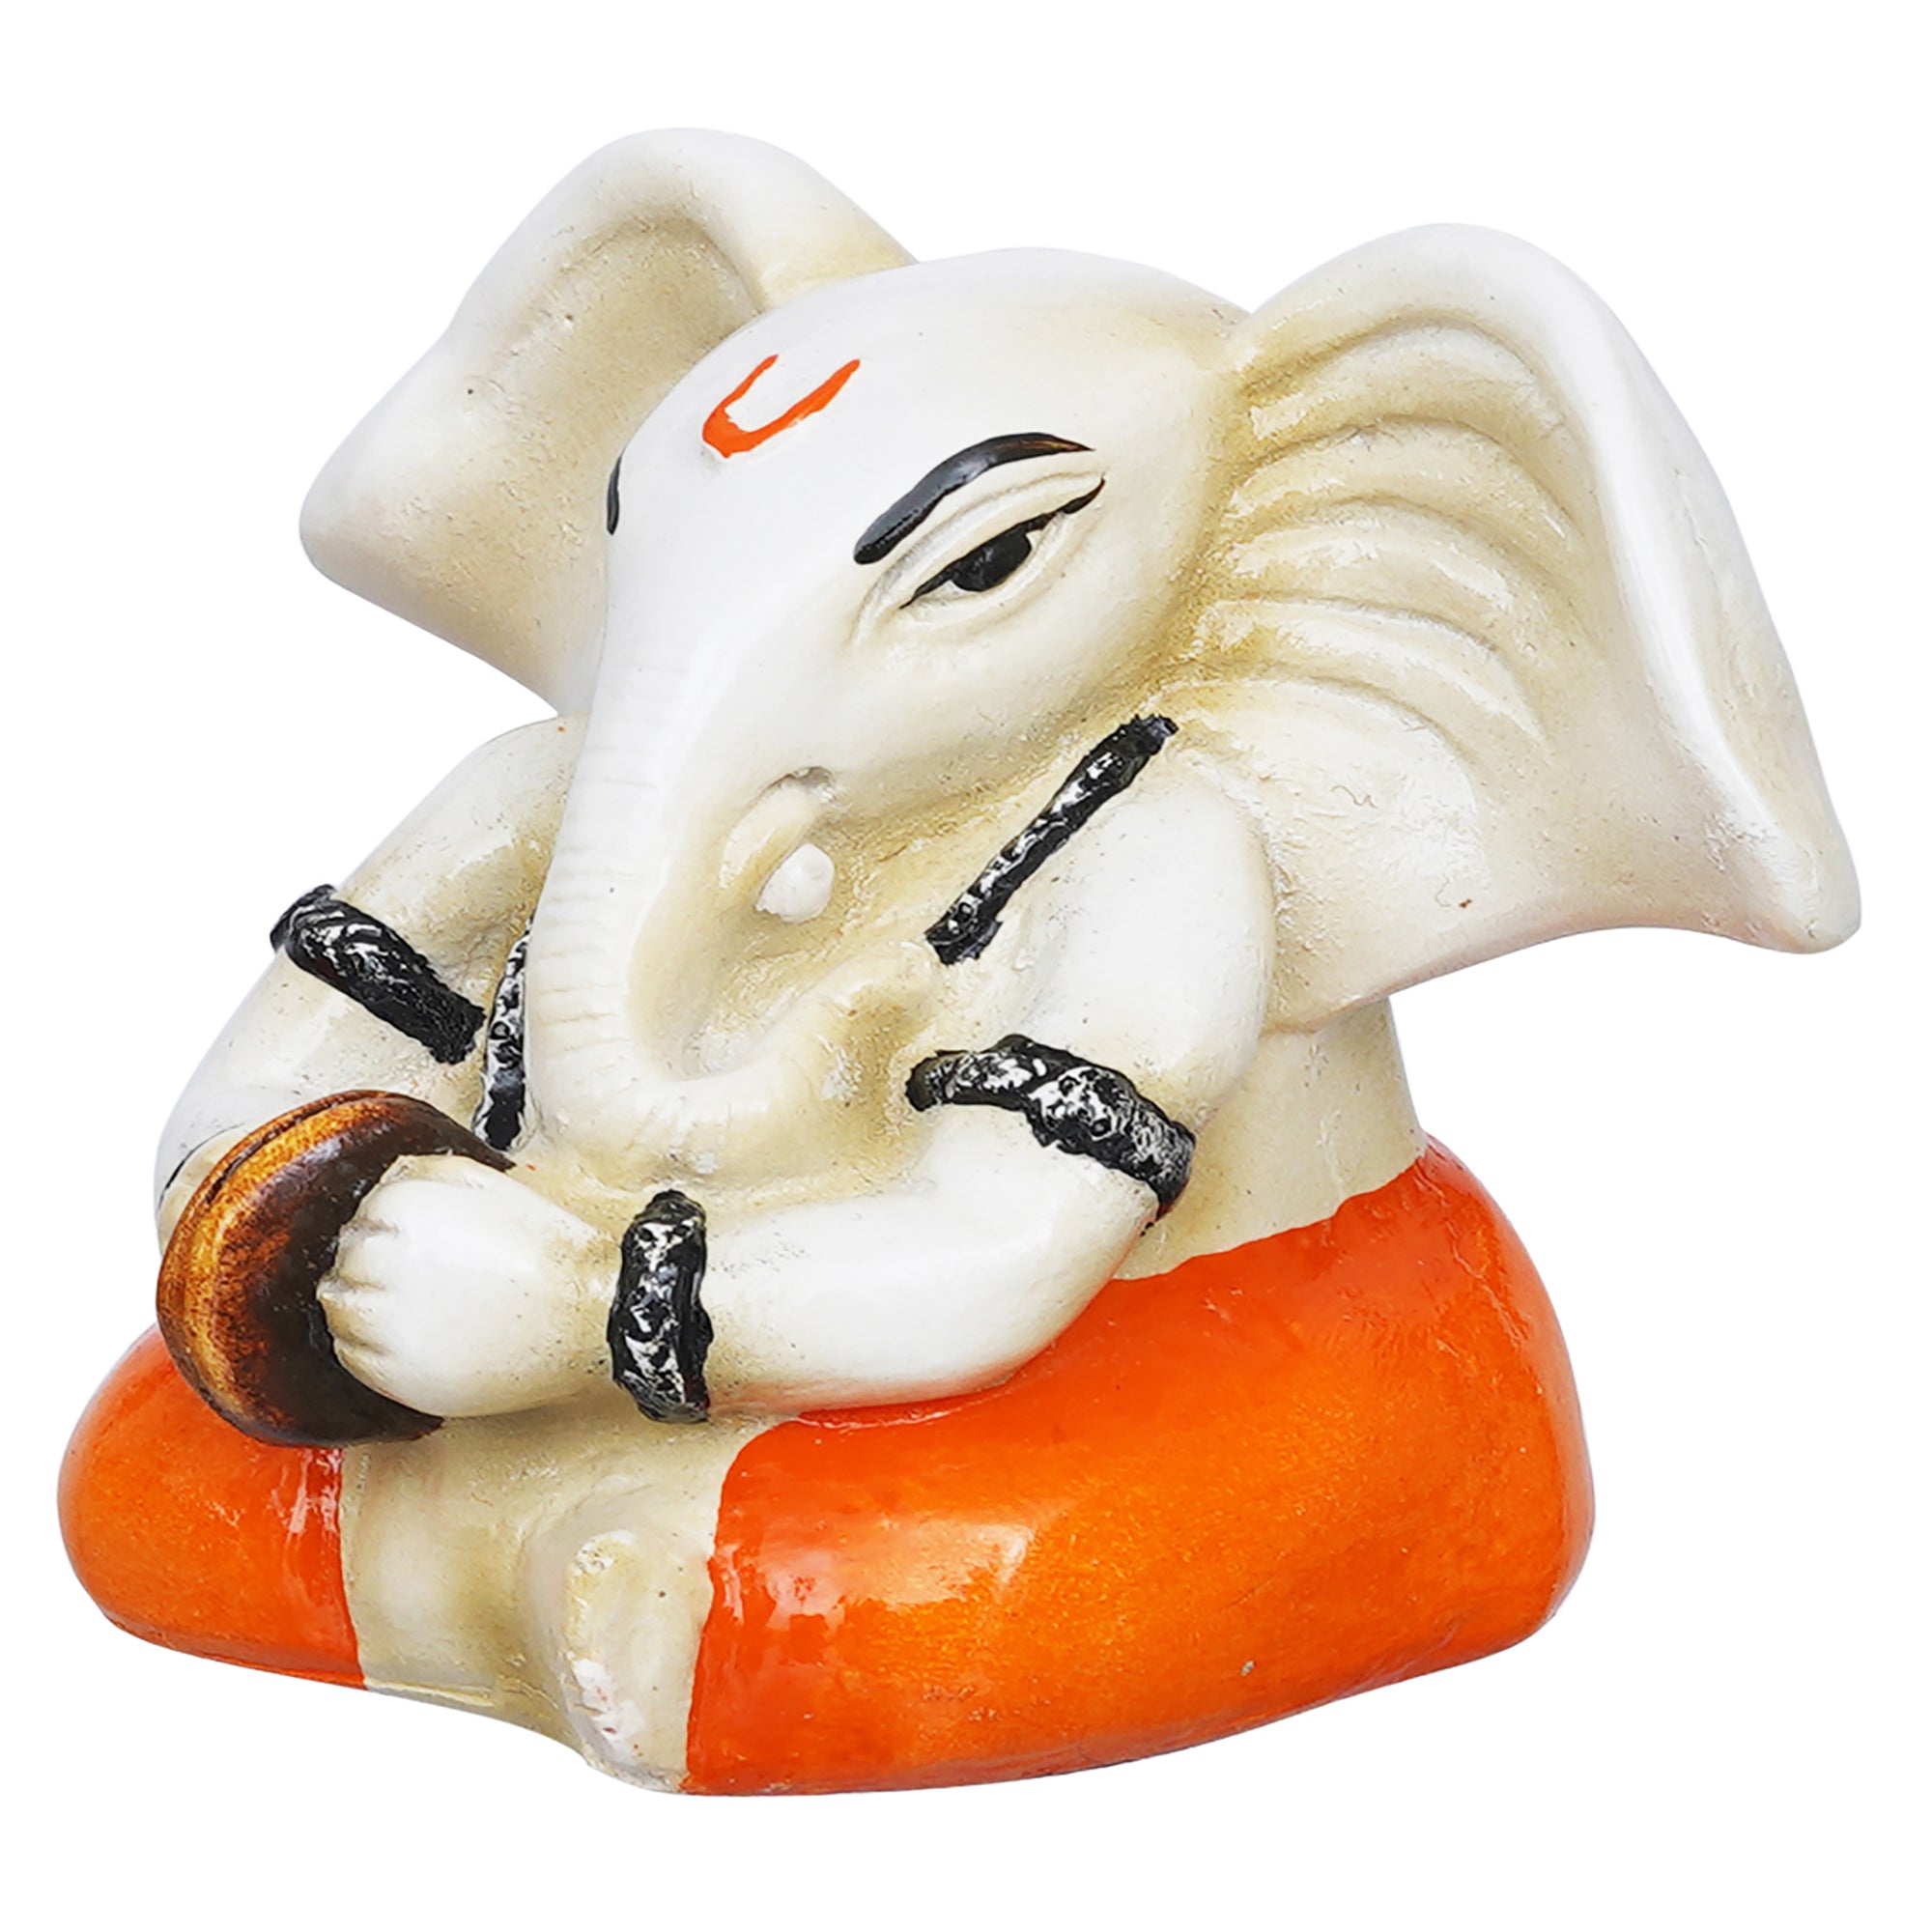 eCraftIndia White & Orange Polyresin Lord Ganesha Idol Playing Cymbals Musical Instrument 7